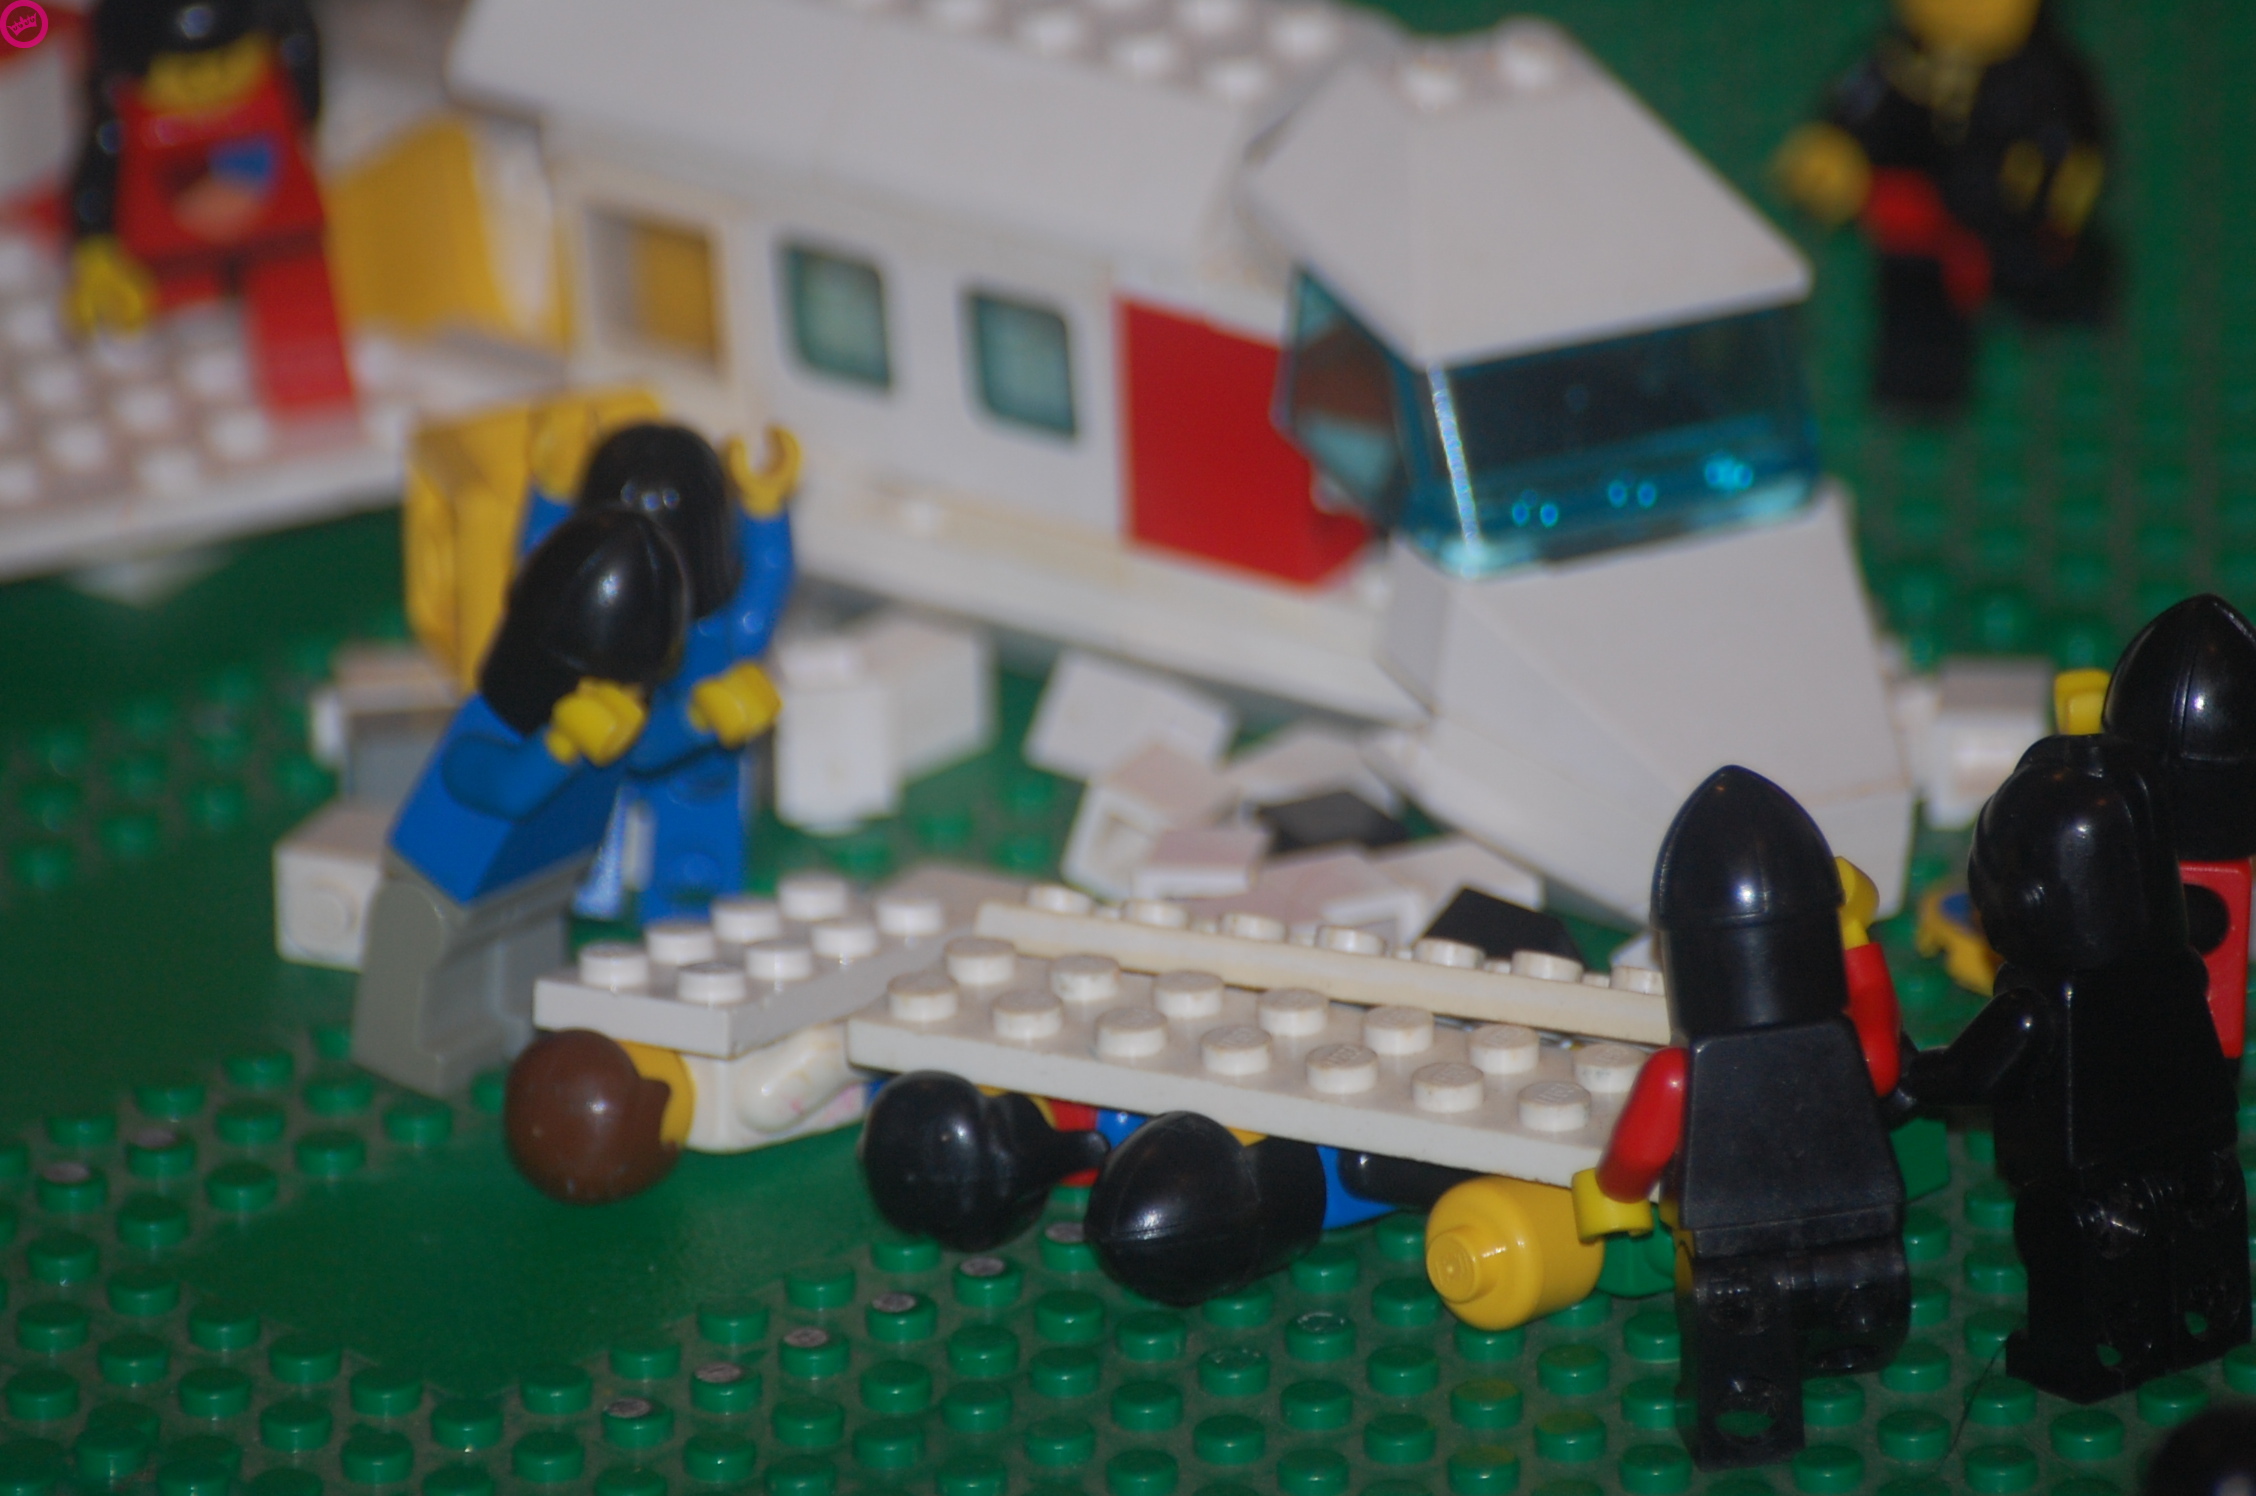 Turkish Airlines crash in LEGO